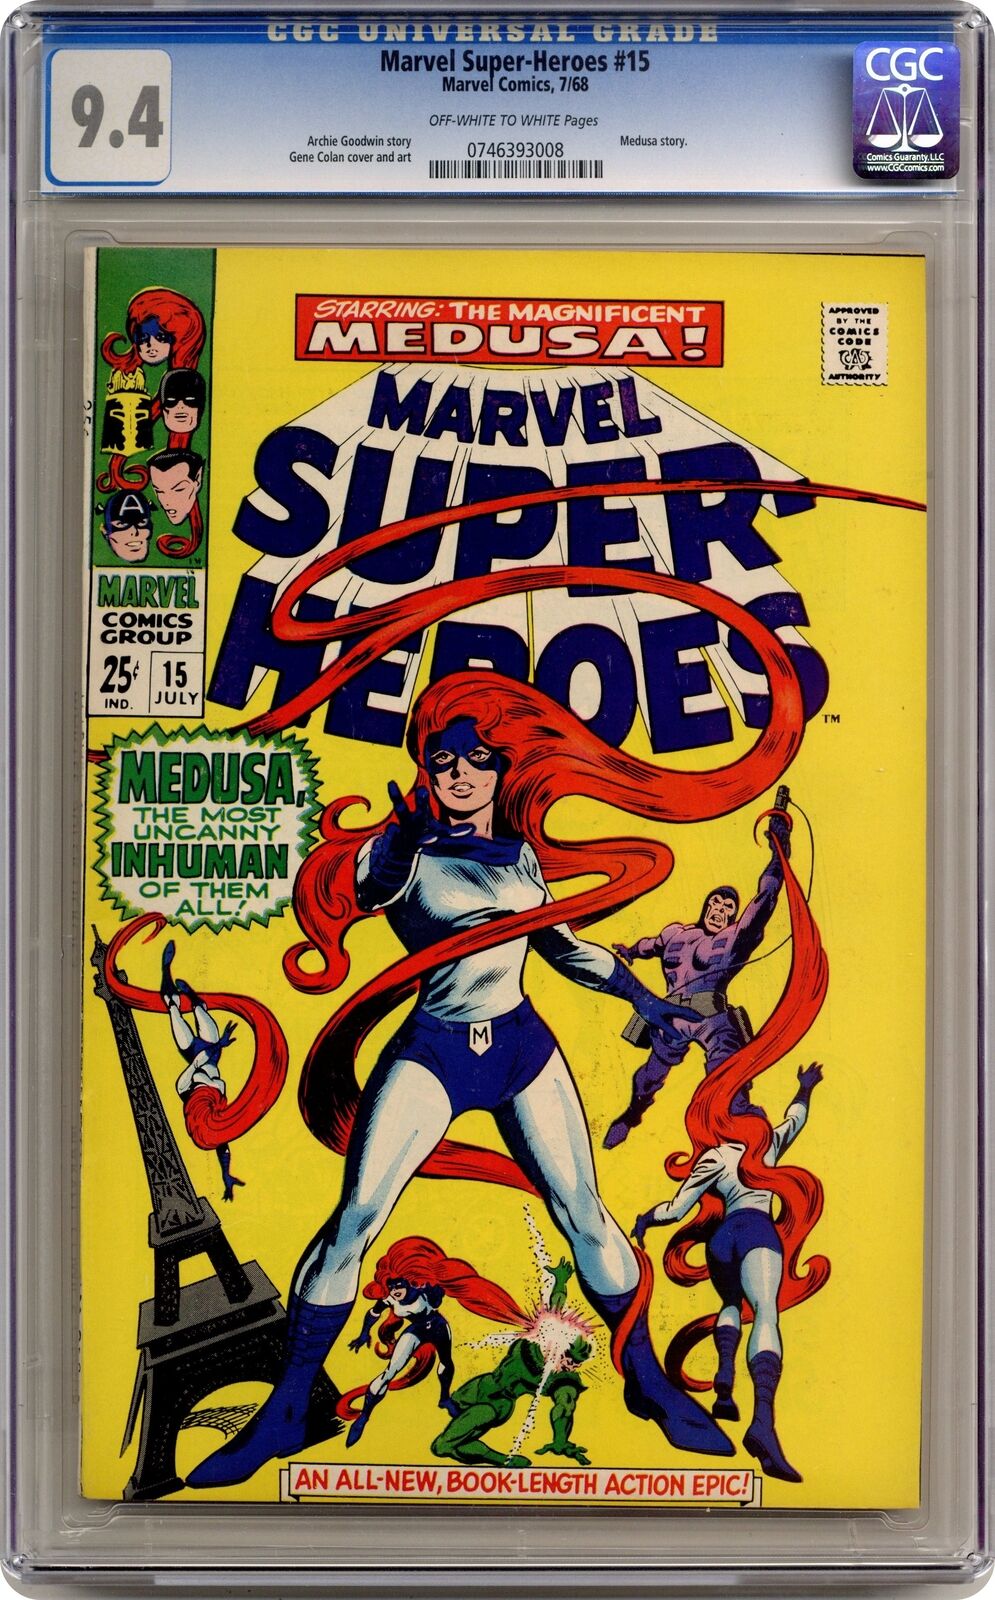 Marvel Super Heroes #15 CGC 9.4 1968 0746393008